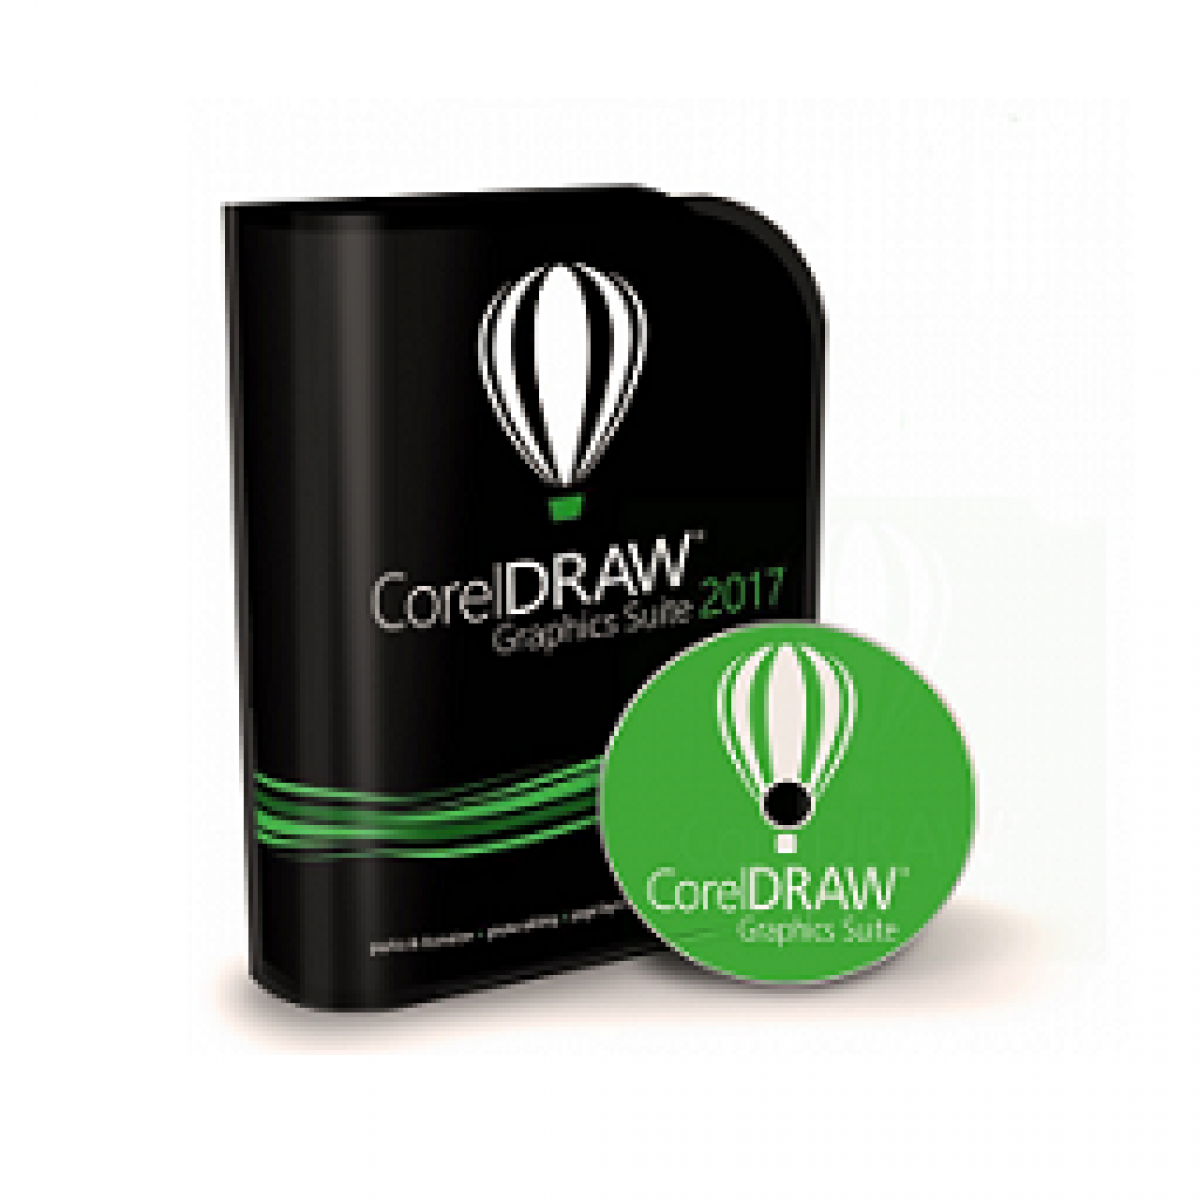 Corel draw x7 free. download full version